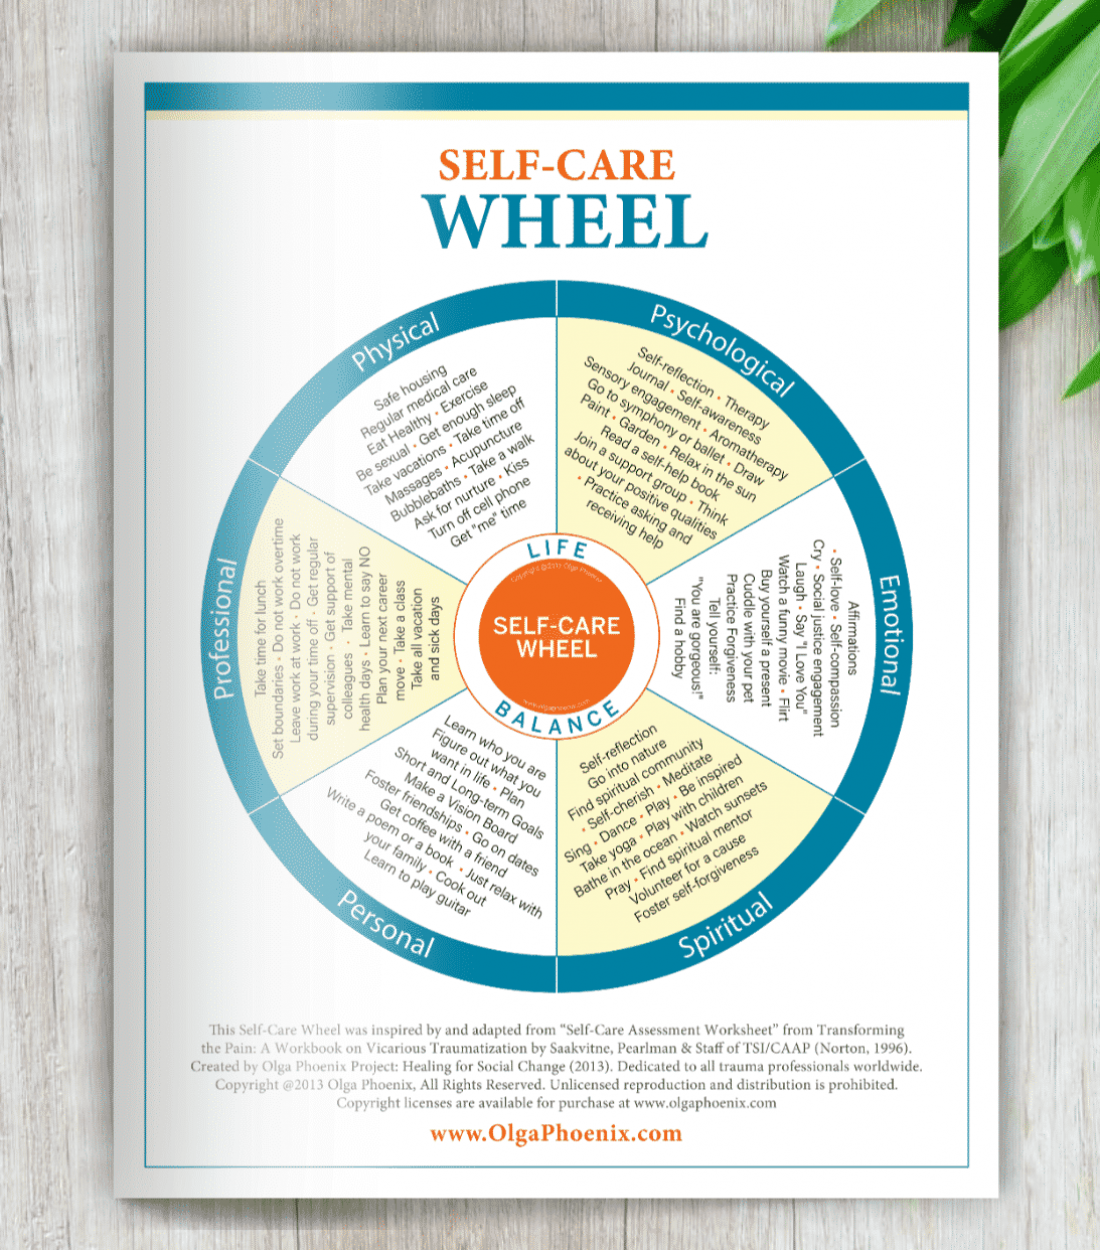 self-care-wheel-world-s-1-self-care-tool-olga-phoenix